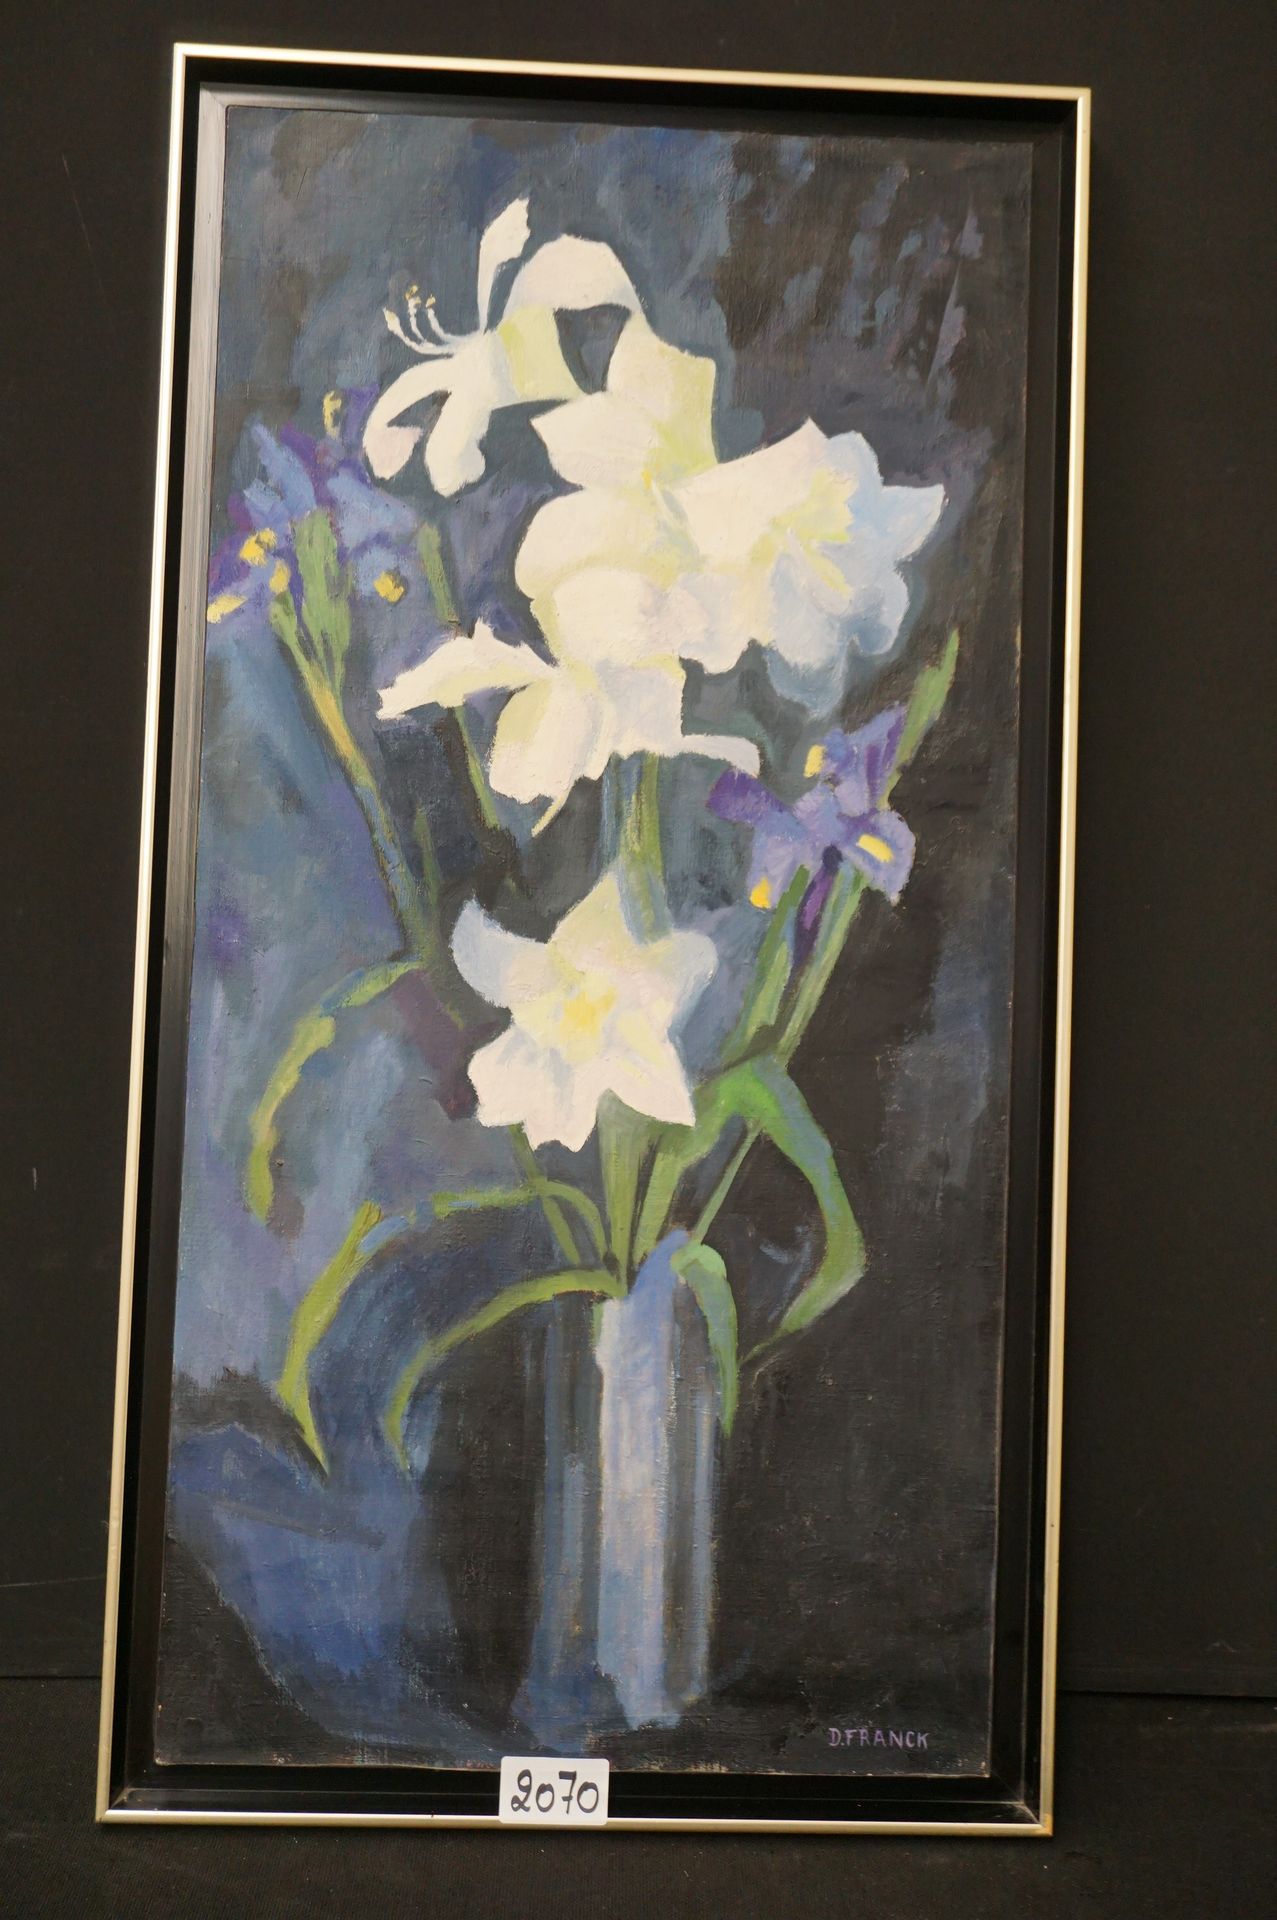 D. FRANCK "Flowers" - Oil on canvas - Signed - 100 x 50 cm